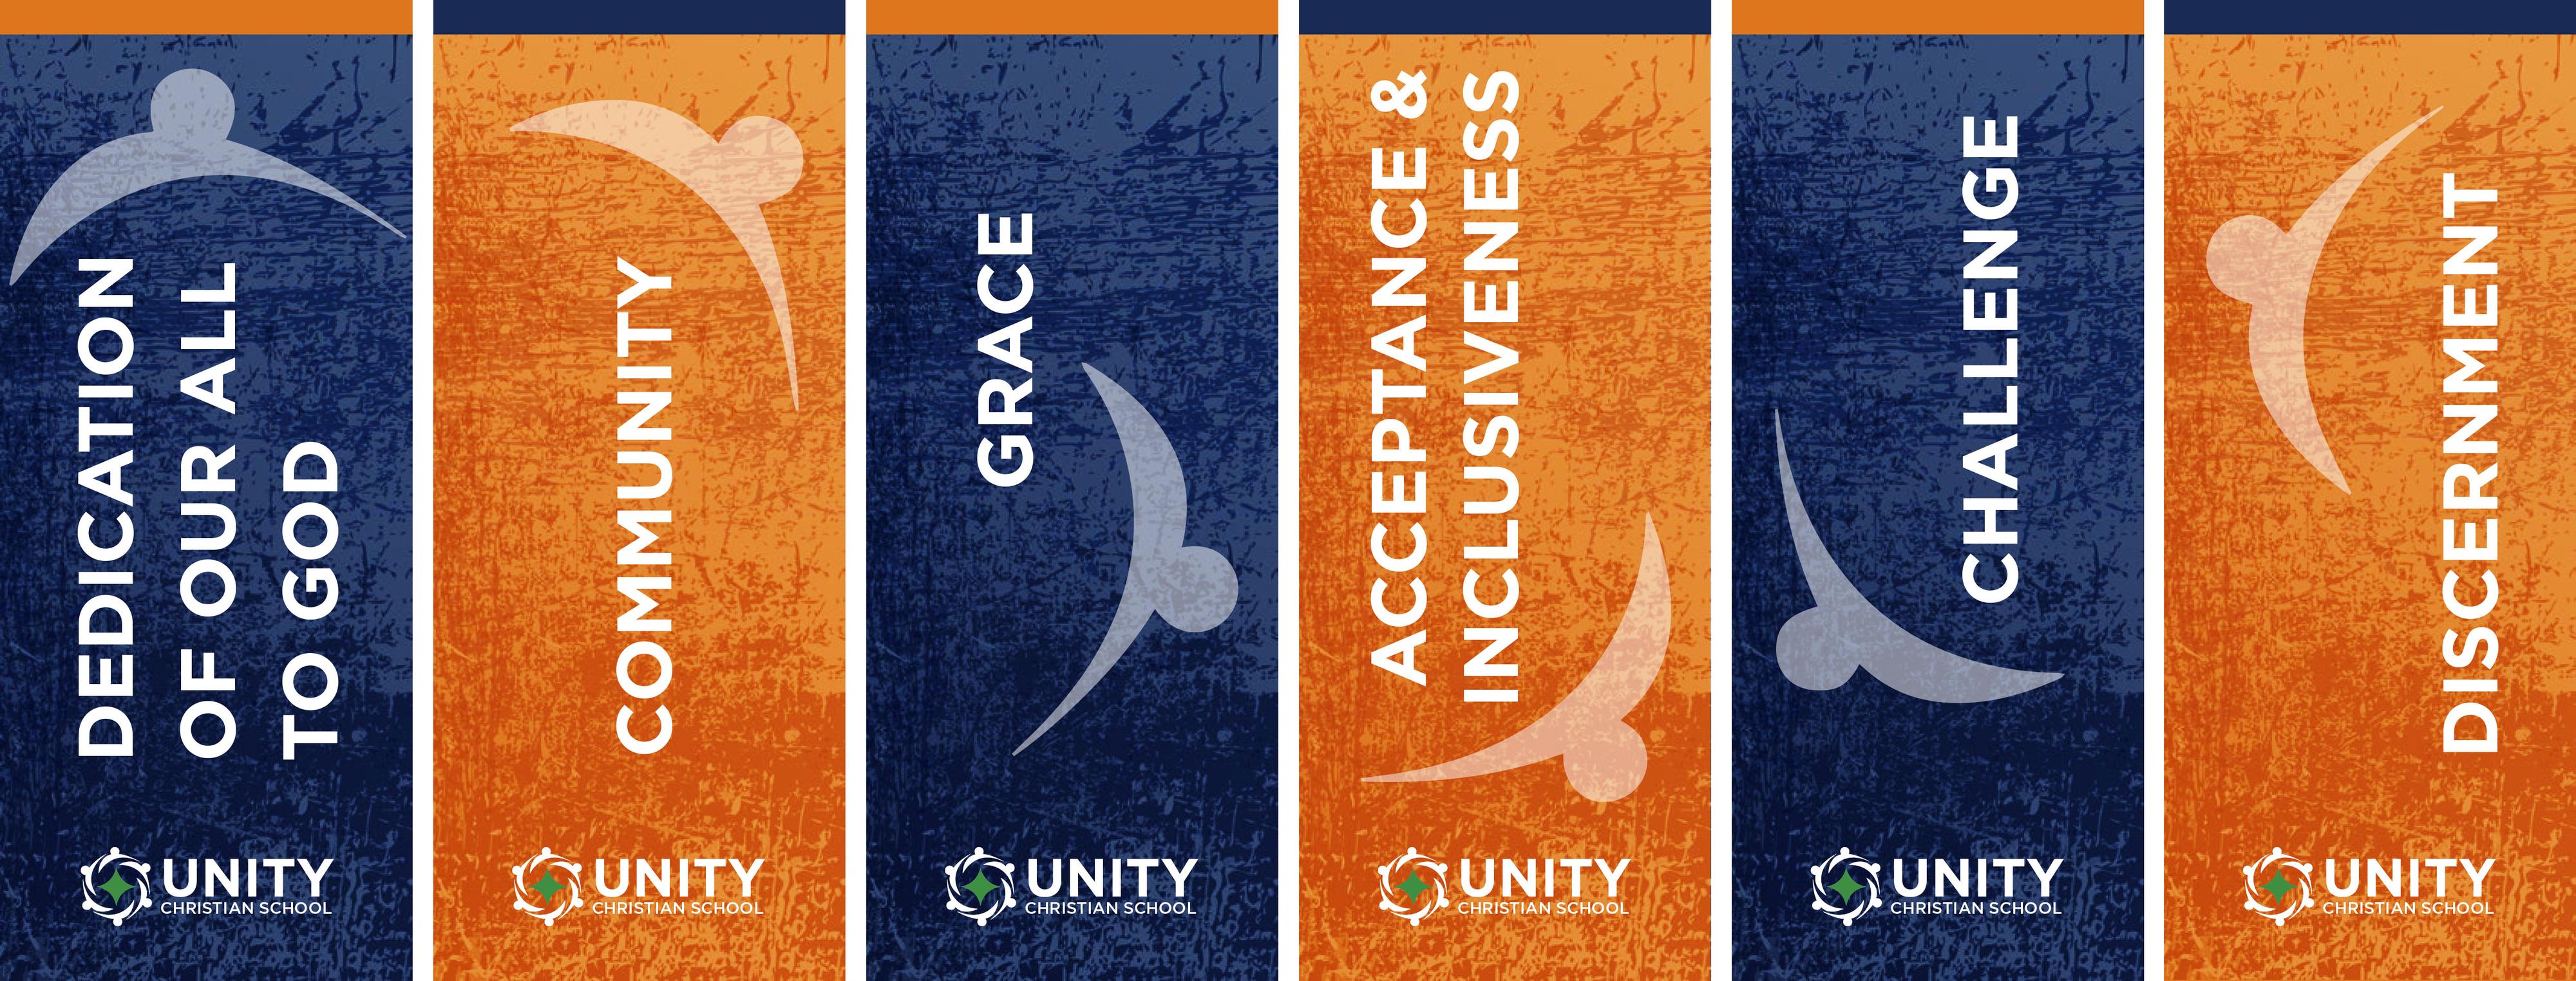 Unity Christian School Core Values